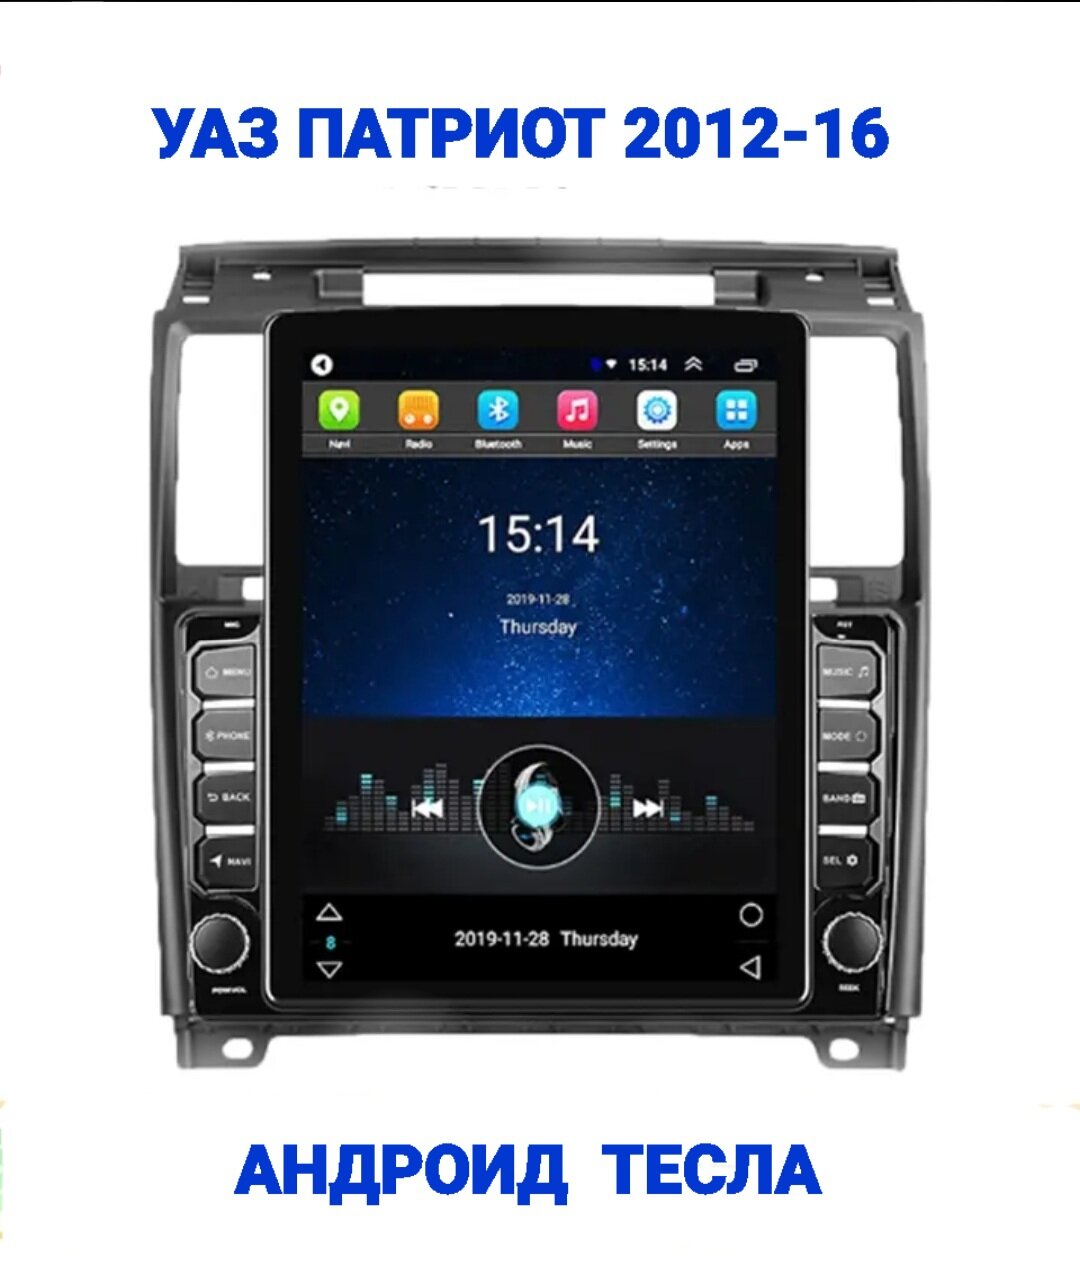 Магнитола Тесла Пионер (Tesla Pioneer) WiFi, GPS, USB, Блютуз, CarPlay, андроид 14, для УАЗ Патриот (UAZ Patriot) 2012-2016